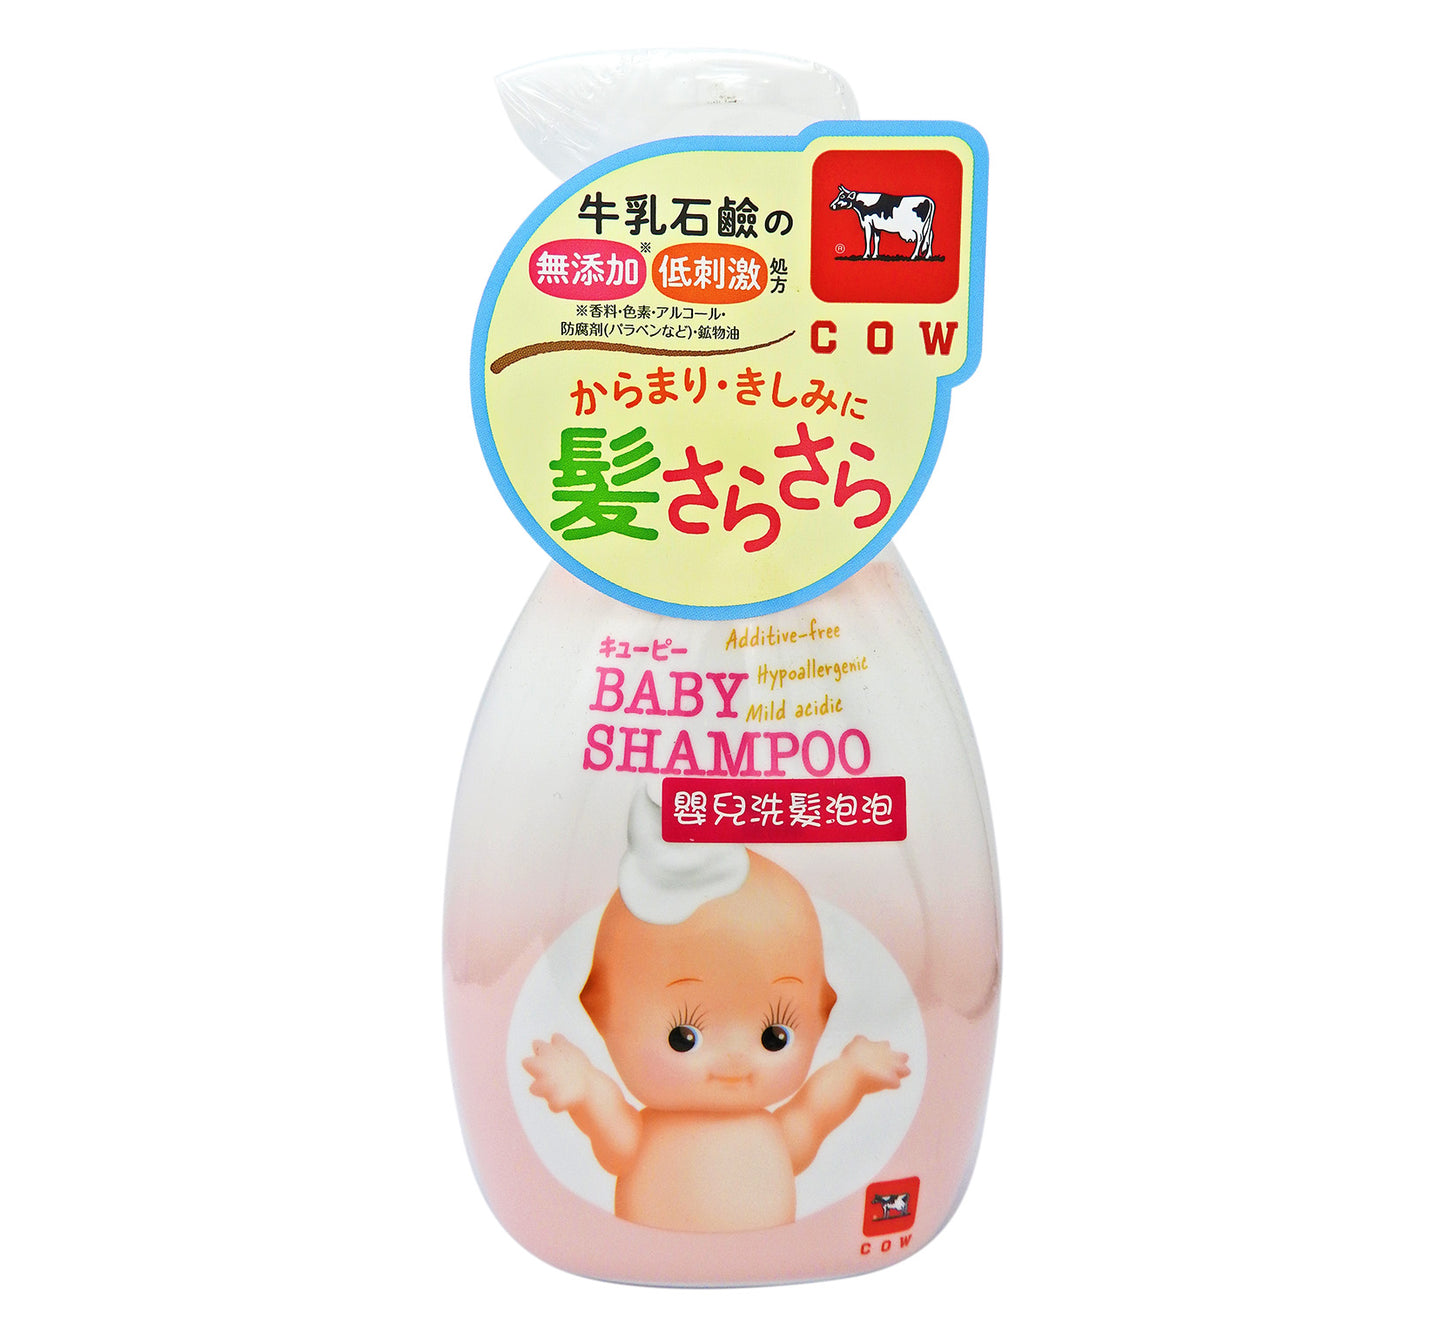 COW - MILKY 牛乳 嬰兒洗髮泡泡 350ml #47261